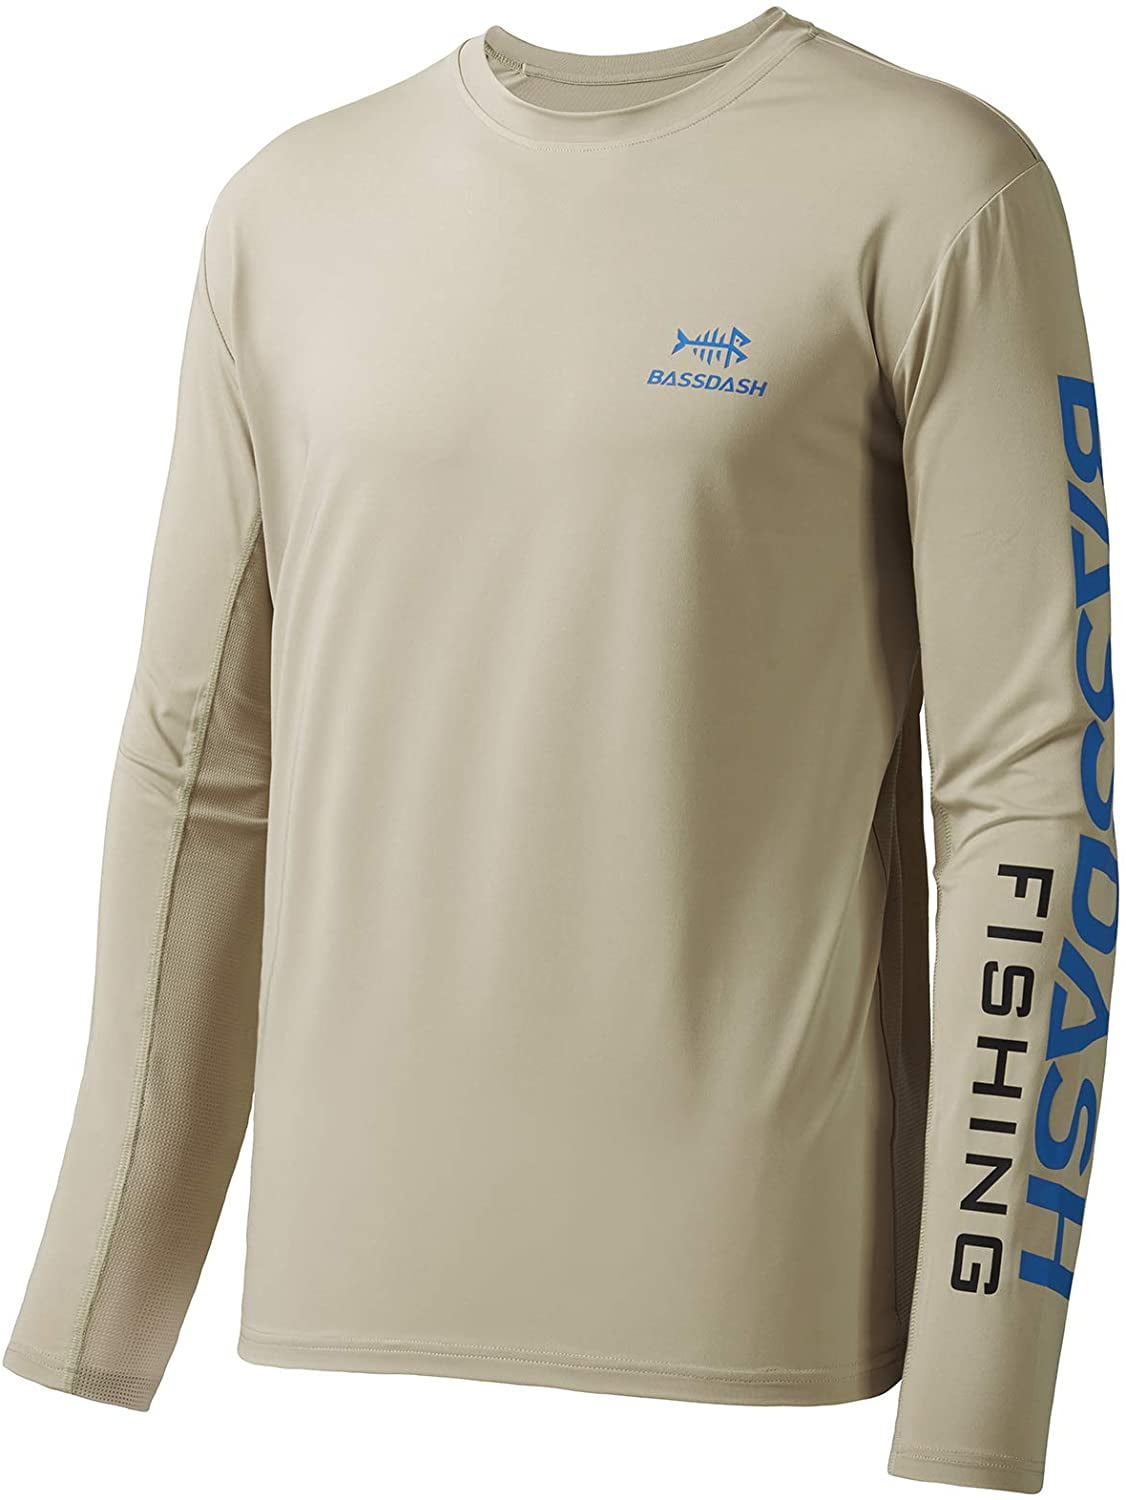 Bassdash Fishing T Shirts for Men UV Sun Protection UPF 50 Long Sleeve Tee T-Shirt 